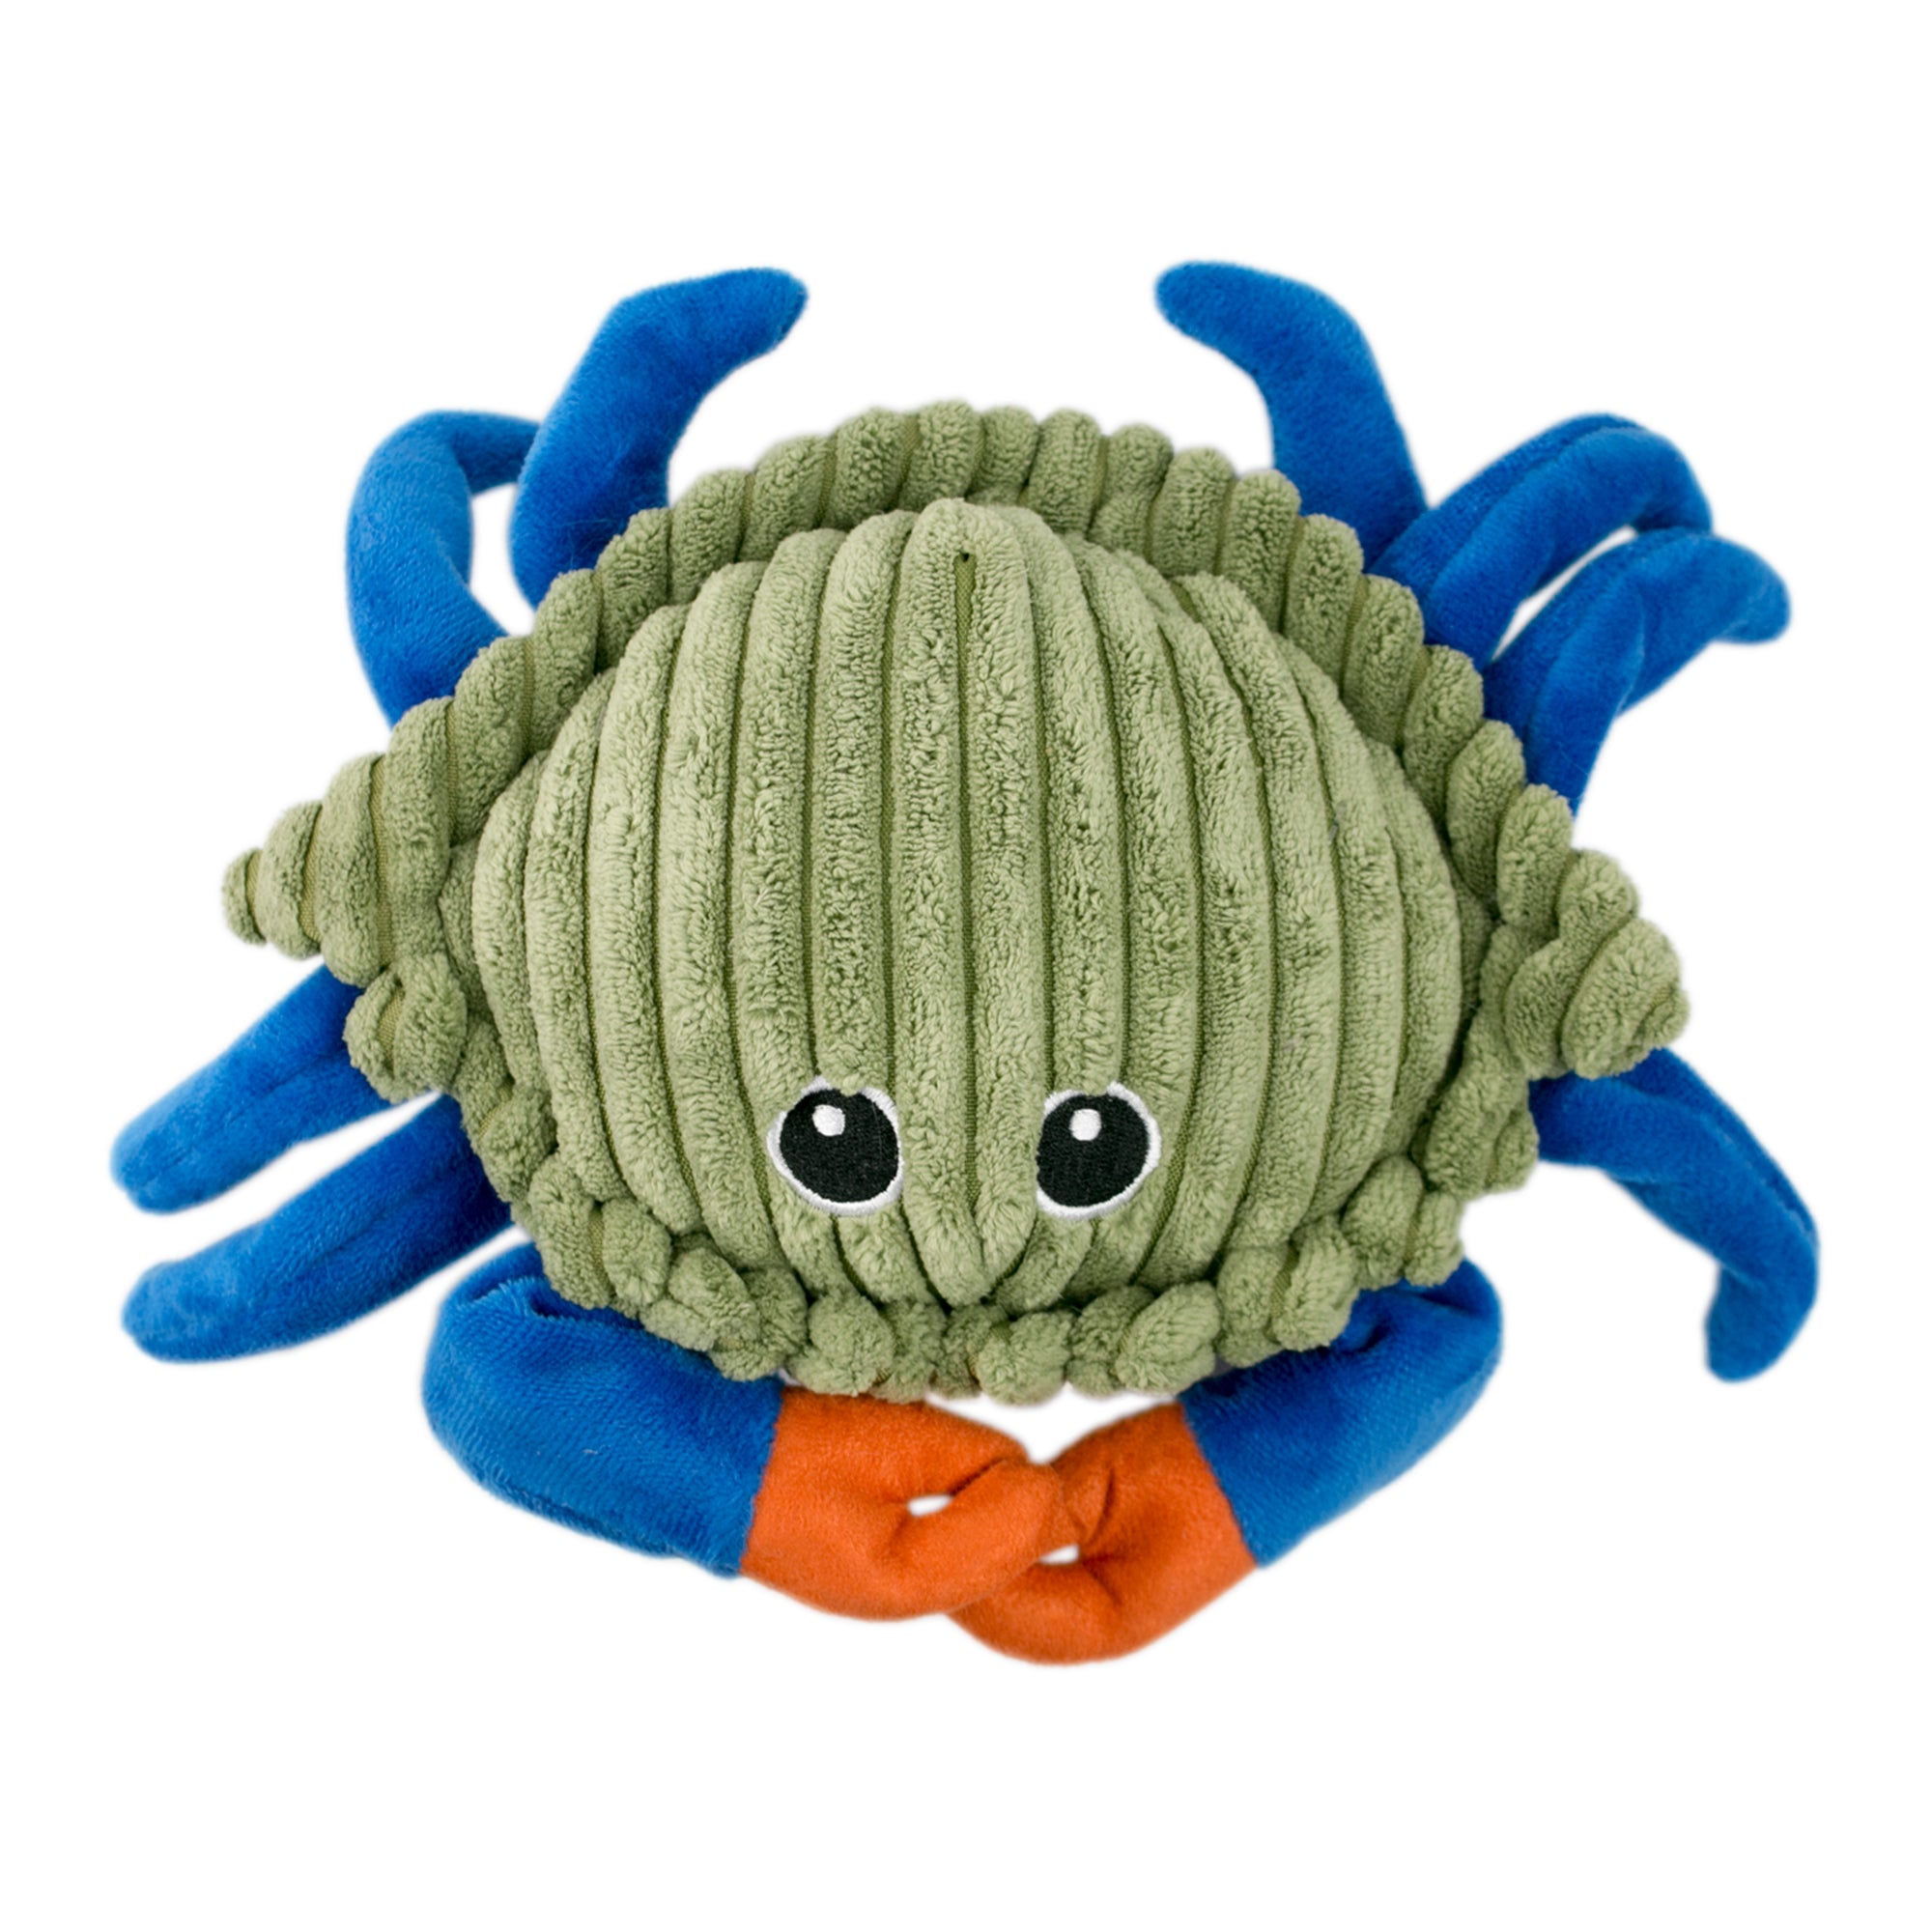 Squeaky Plush Dog Toy: Animated Crab